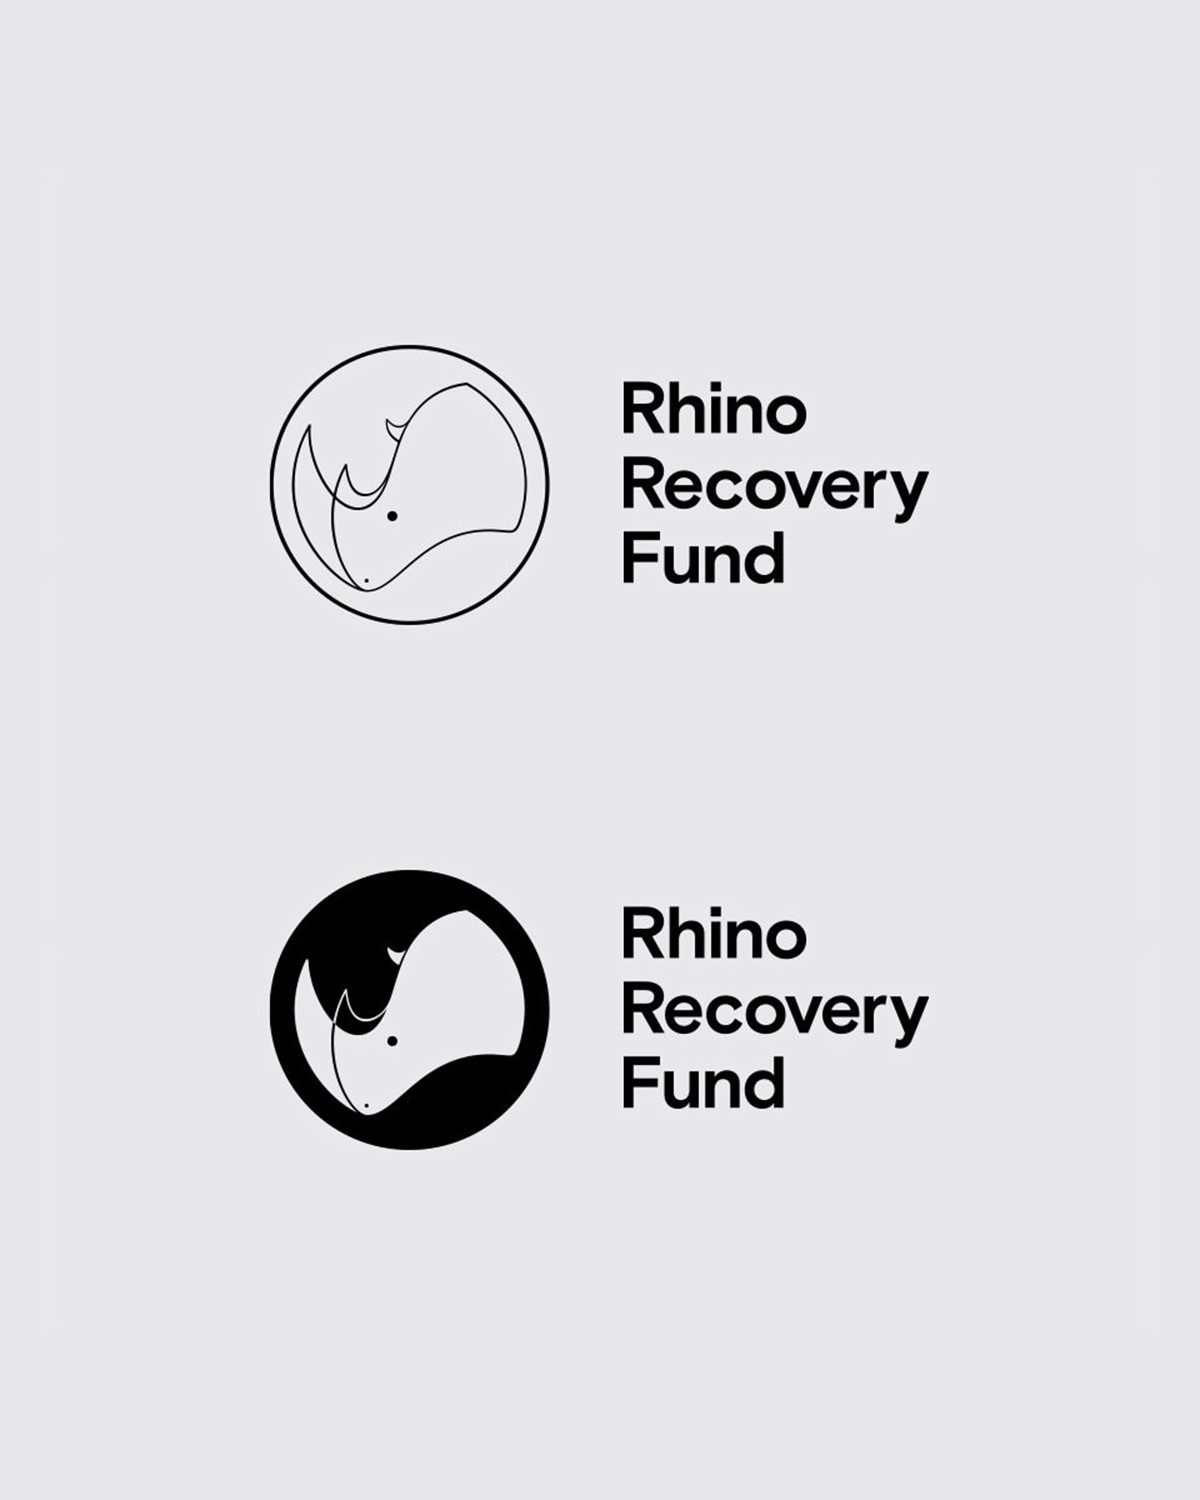 Rhino Recovery Fund. Brand identity logo lock-ups. Designed by Superfried.